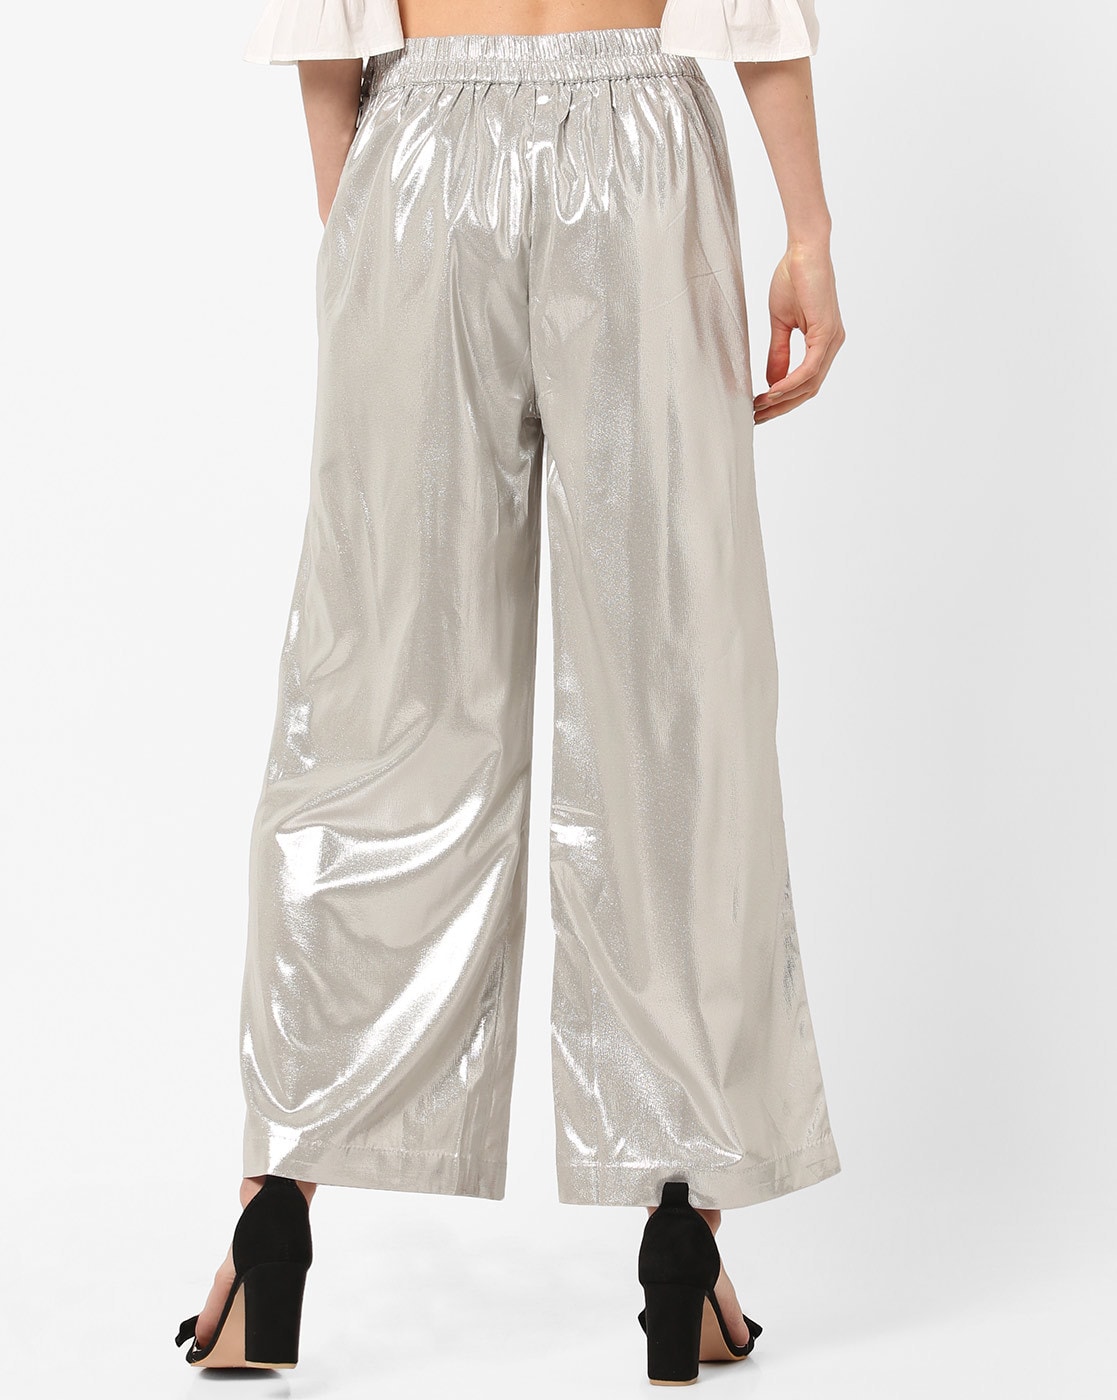 Buy TNQ Womens Cotton Lycra Shimmer Metallic Golden Palazzo Pants With  Half Inner LiningFree Size Metallic Silver Free Size at Amazonin